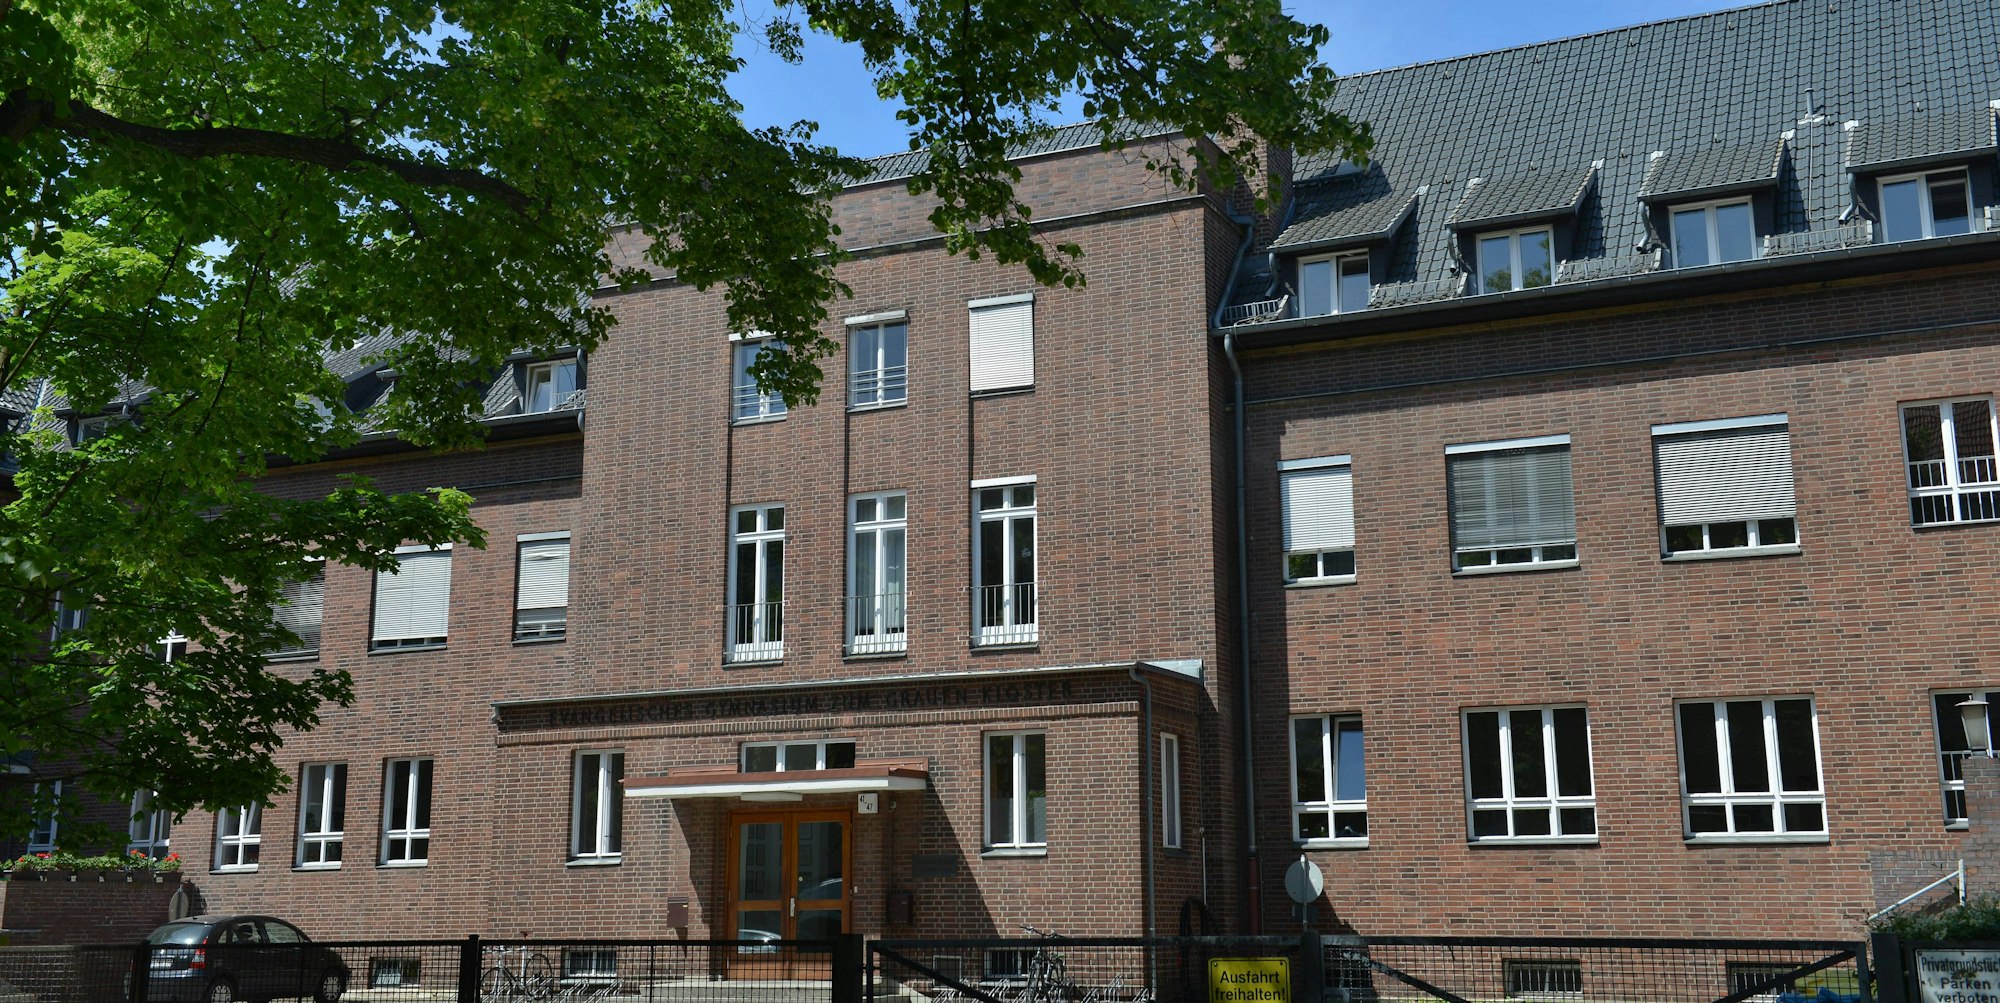 Graues Kloster Berlin